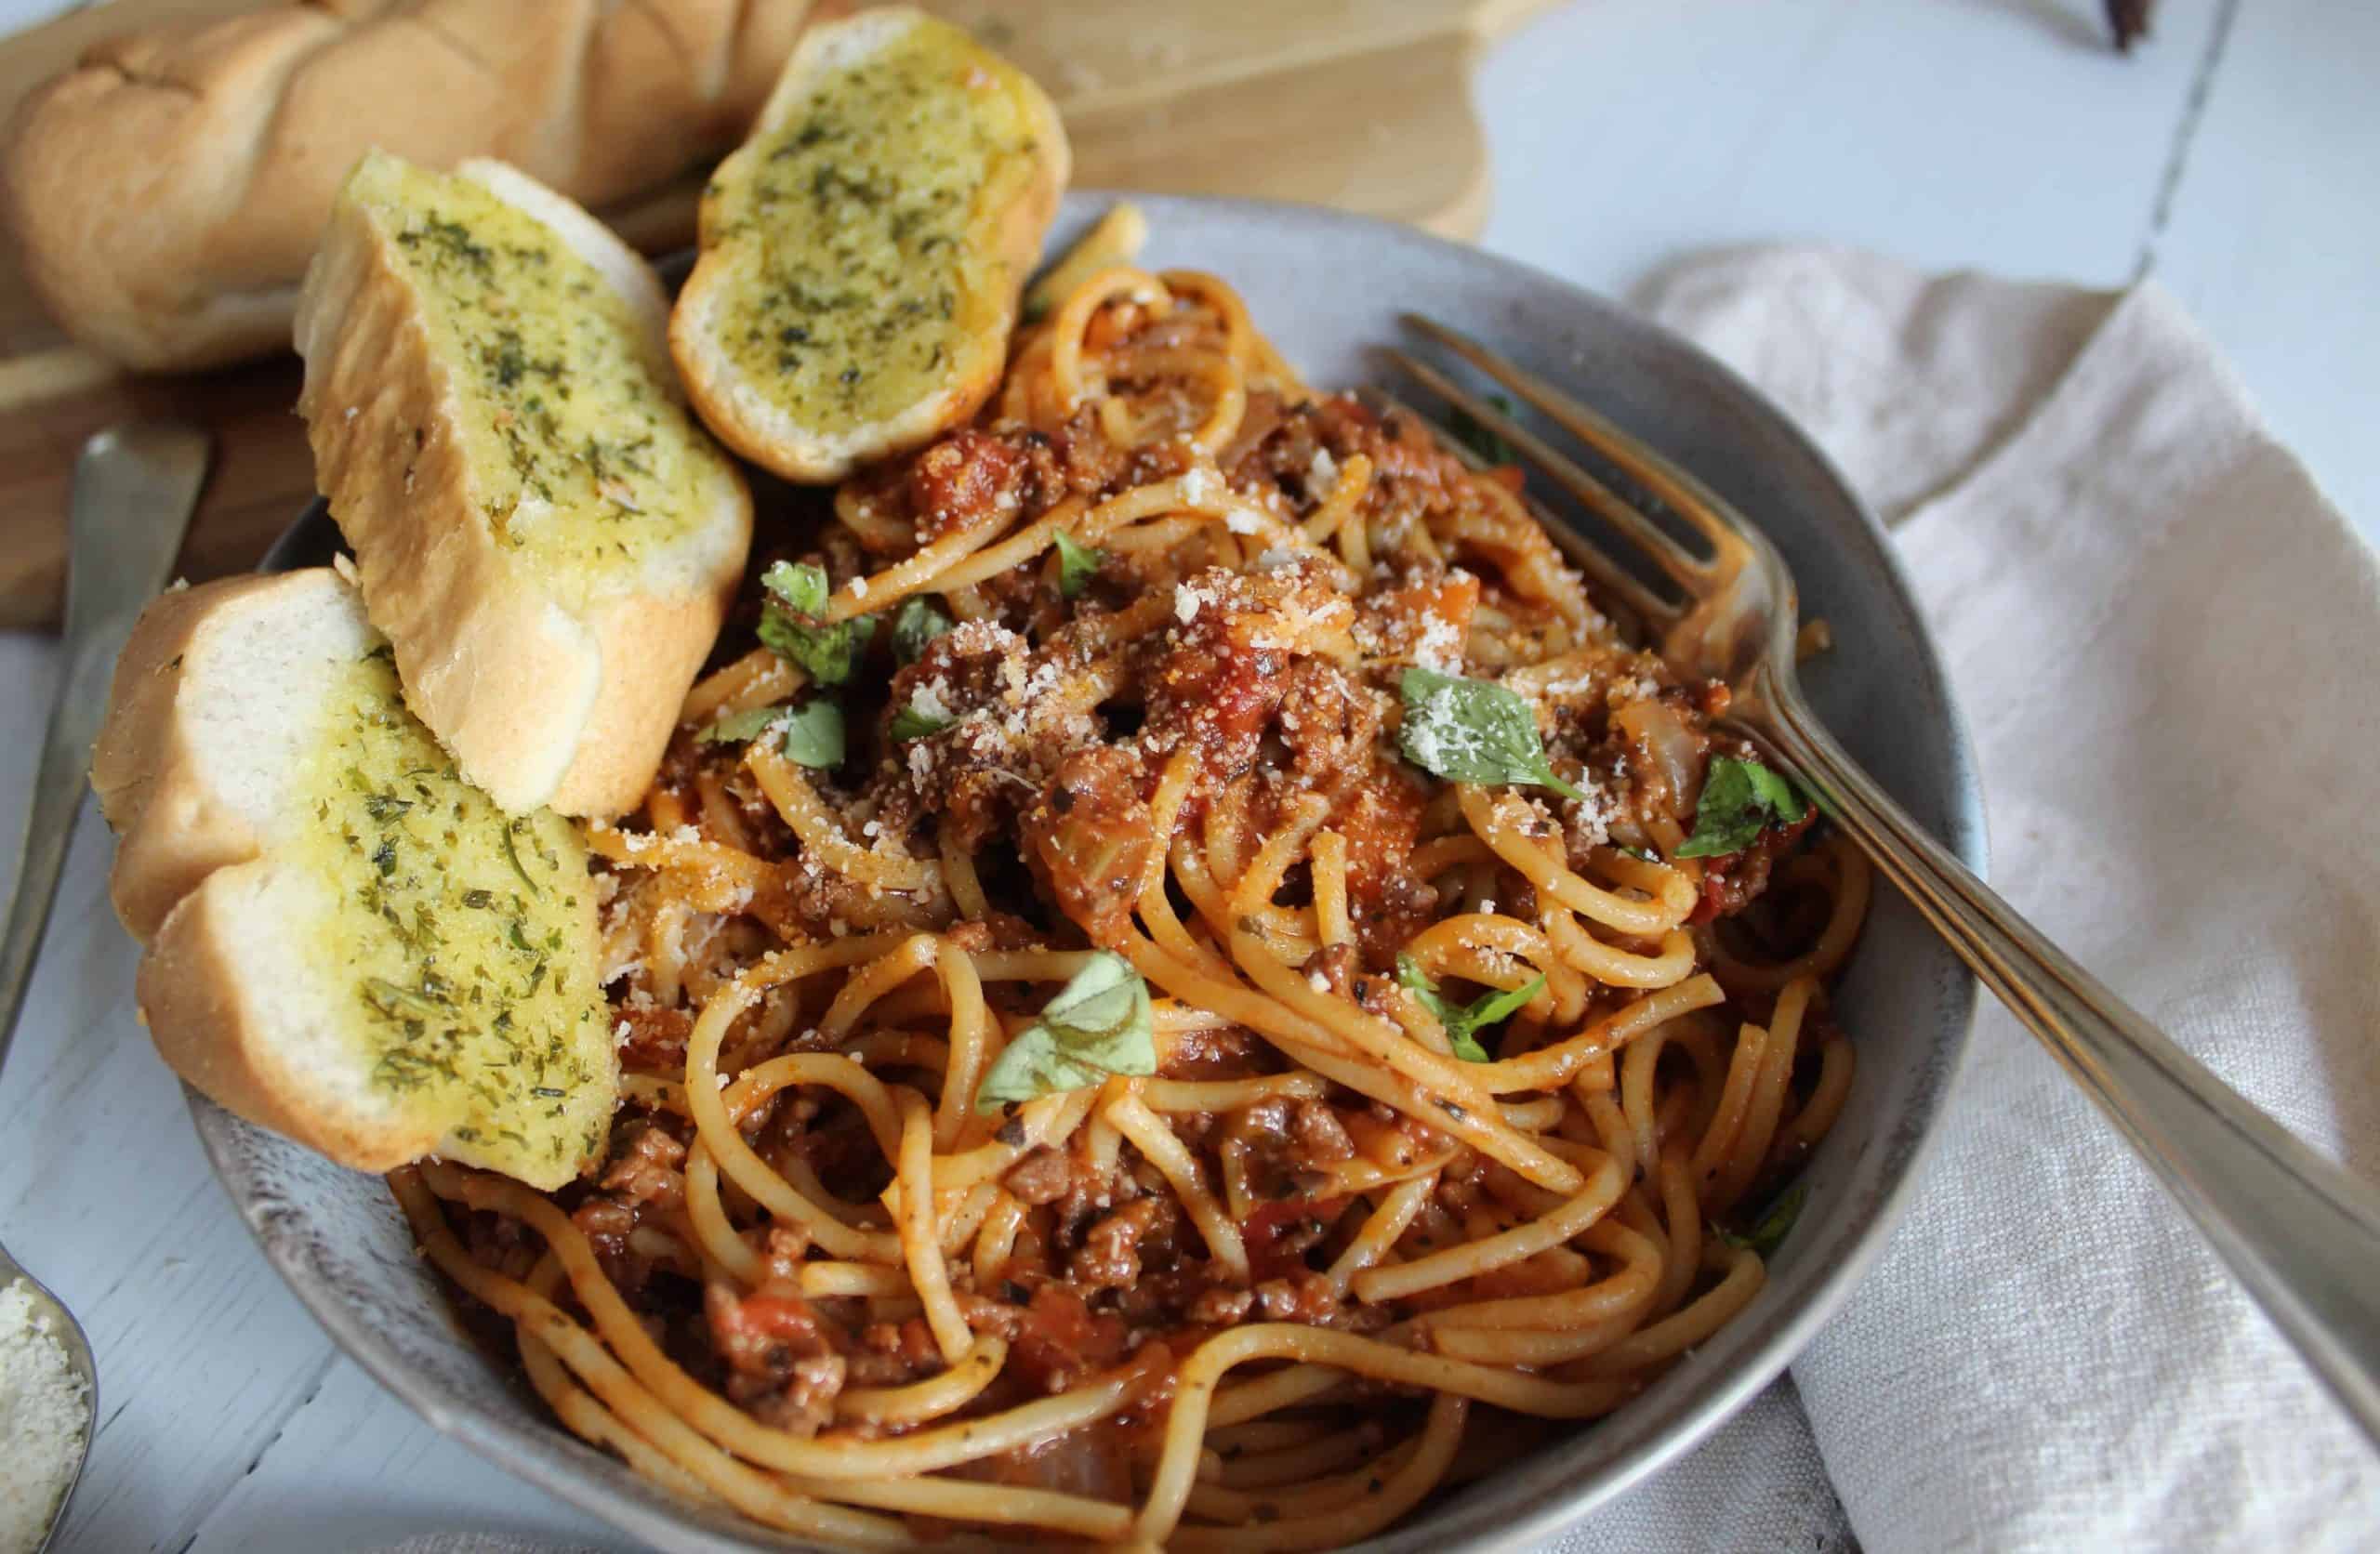 The BEST gluten free spaghetti bolognese recipe